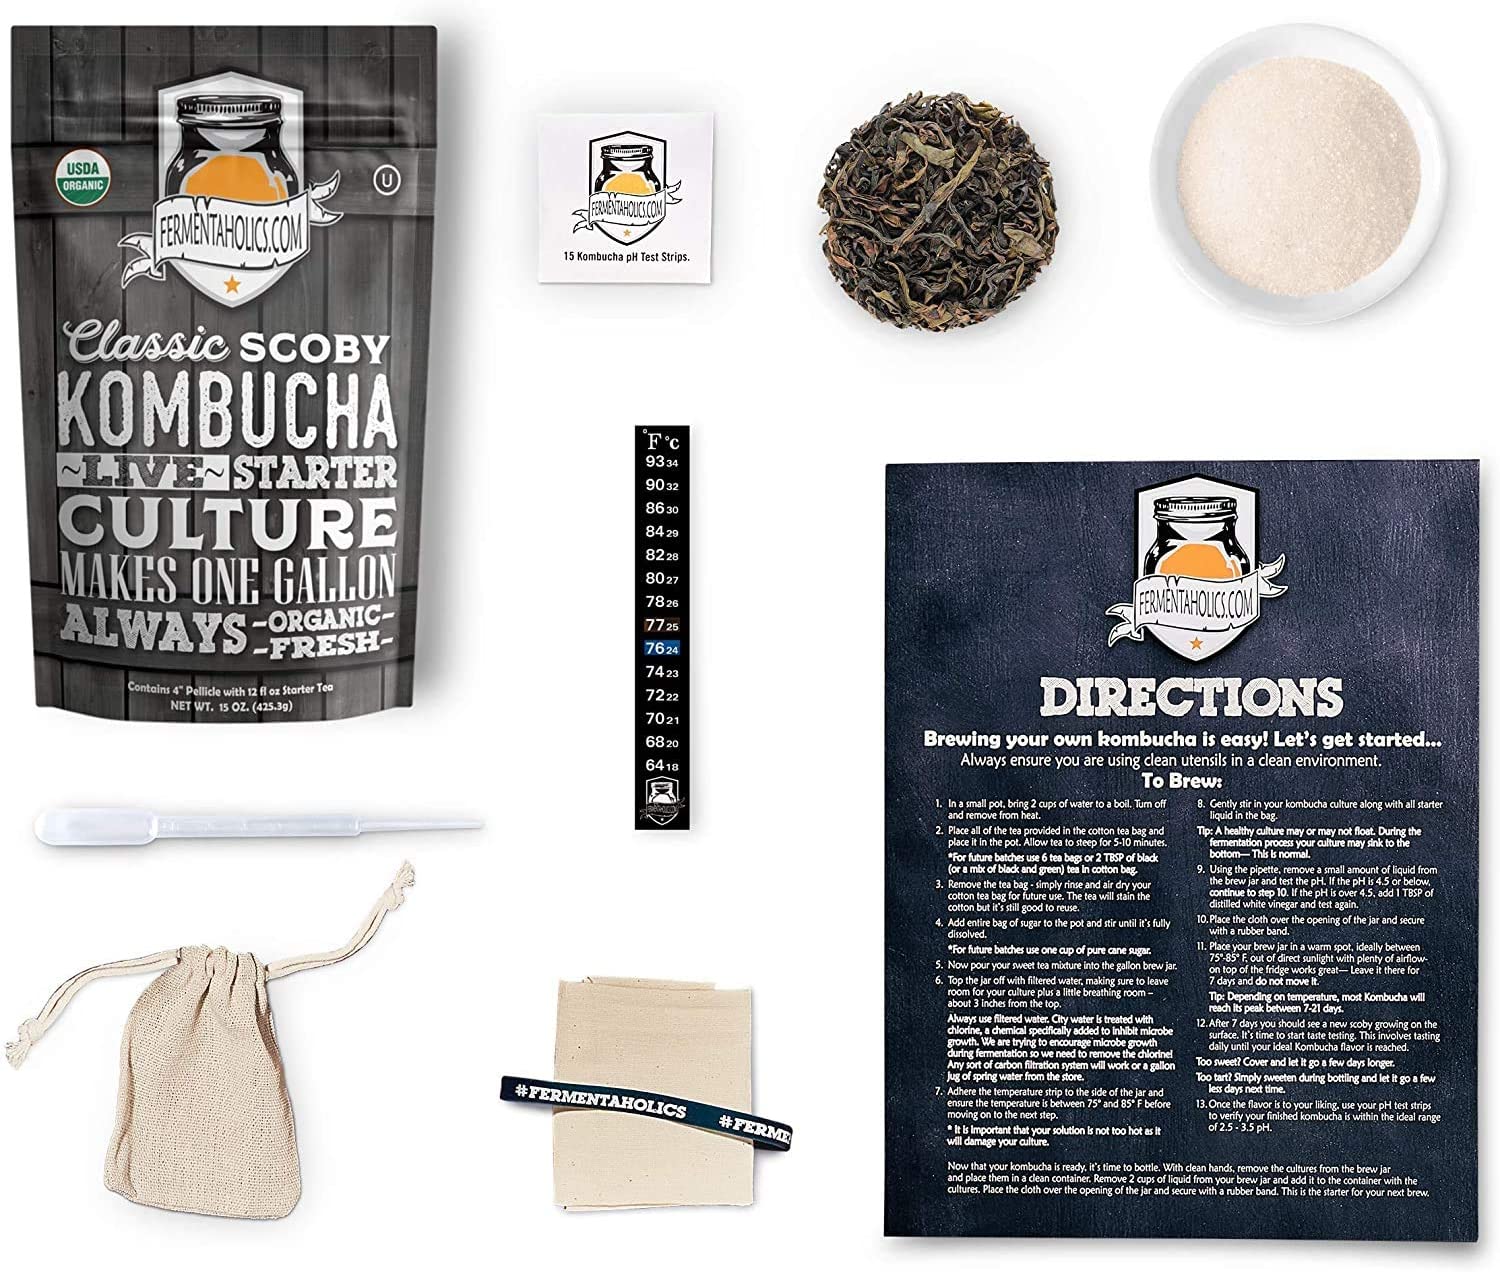  Organic Kombucha Home Brewing Starter Kit, 5-Inch Large Scoby  Kombucha Starter Kit, Complete Kit Includes What You Need w/ 16 oz Starter  Tea, Brewing Jar & Brewing Supplies